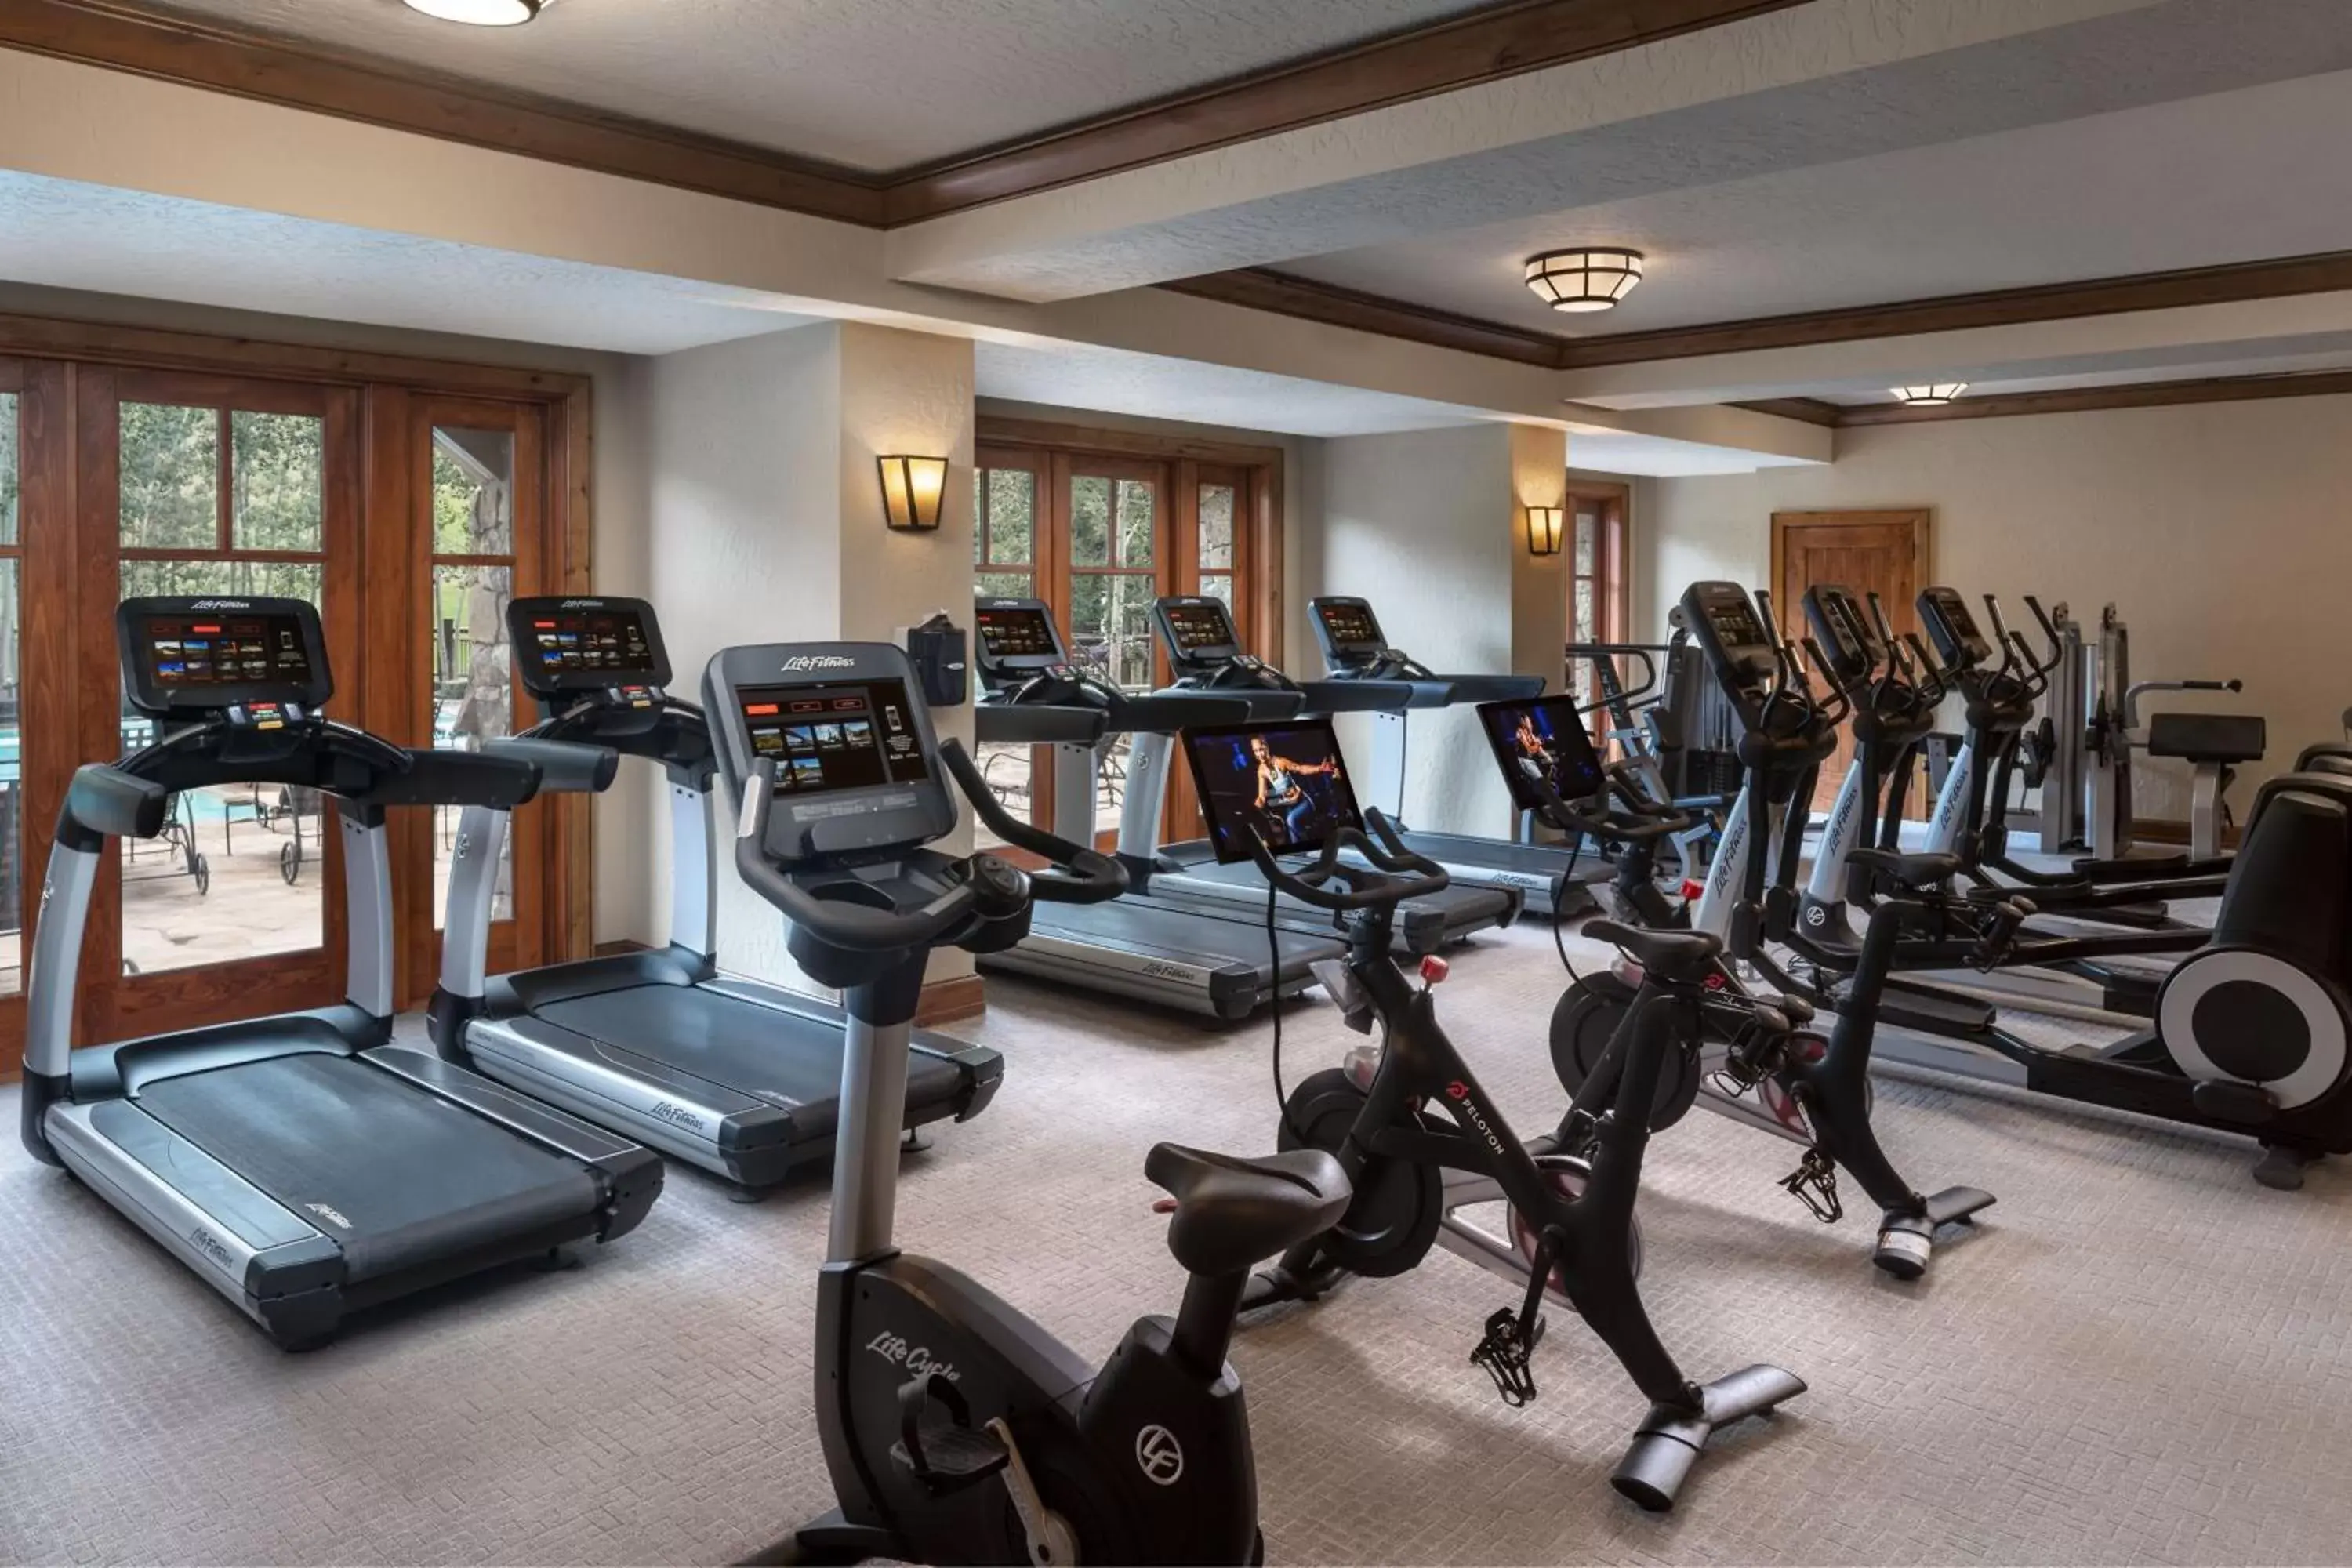 Fitness centre/facilities, Fitness Center/Facilities in The Ritz-Carlton, Bachelor Gulch